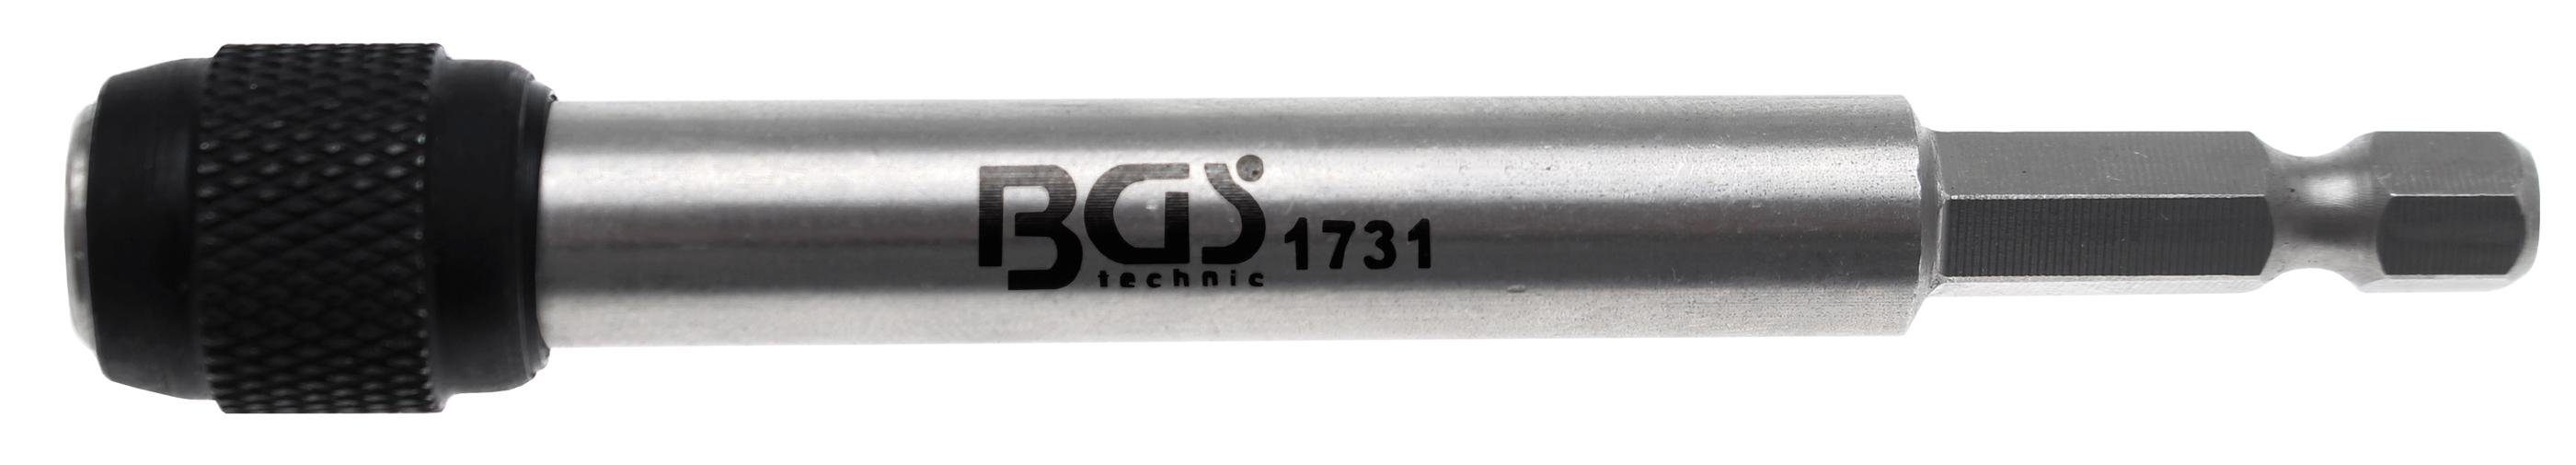 BGS technic Ratschenringschlüssel Automatischer Bithalter, Abtrieb Innensechskant 6,3 mm (1/4), 100 mm